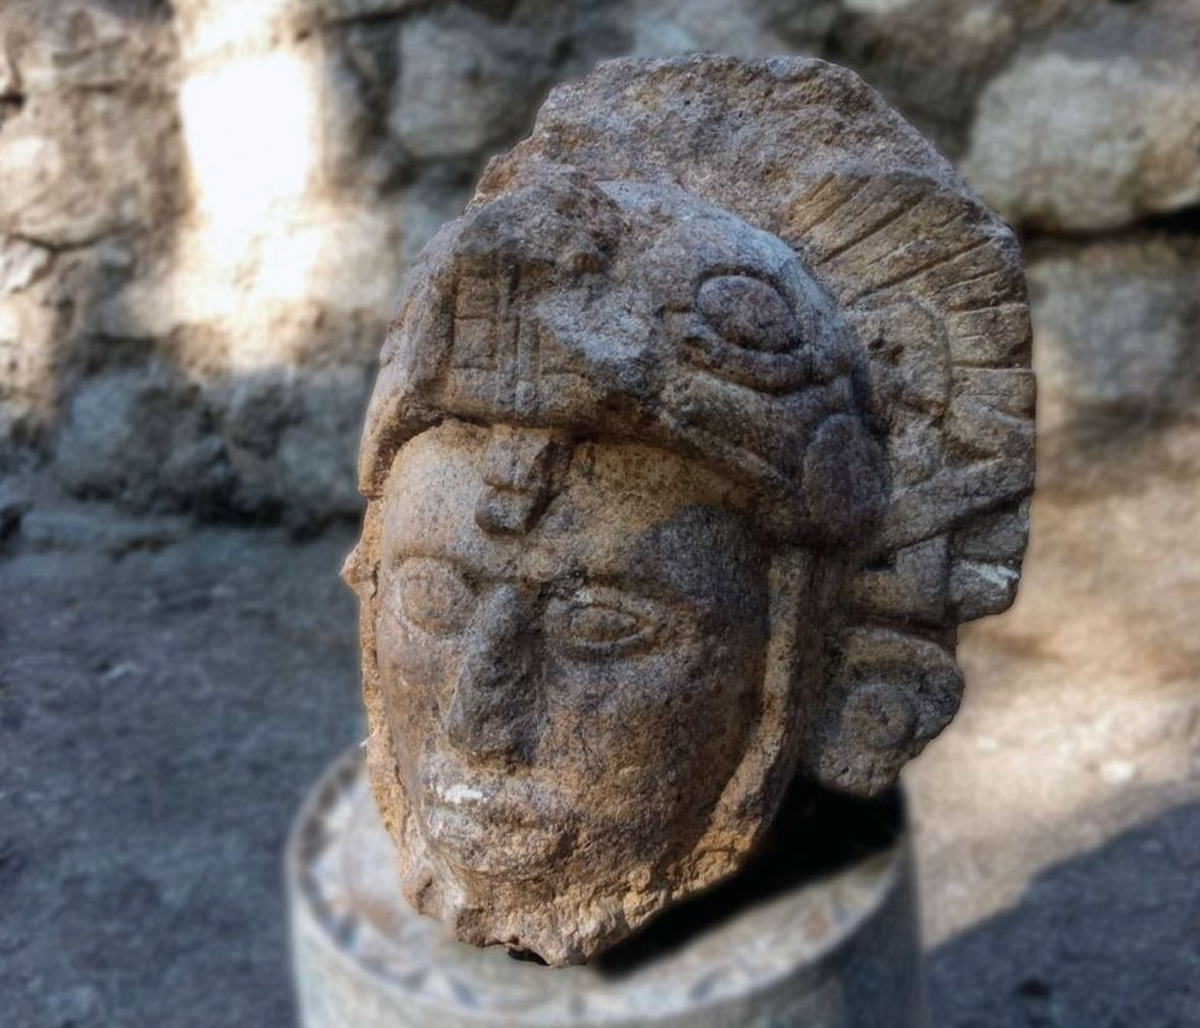 Archaeologists find strange Maya warrior statue with helmet shaped like snake